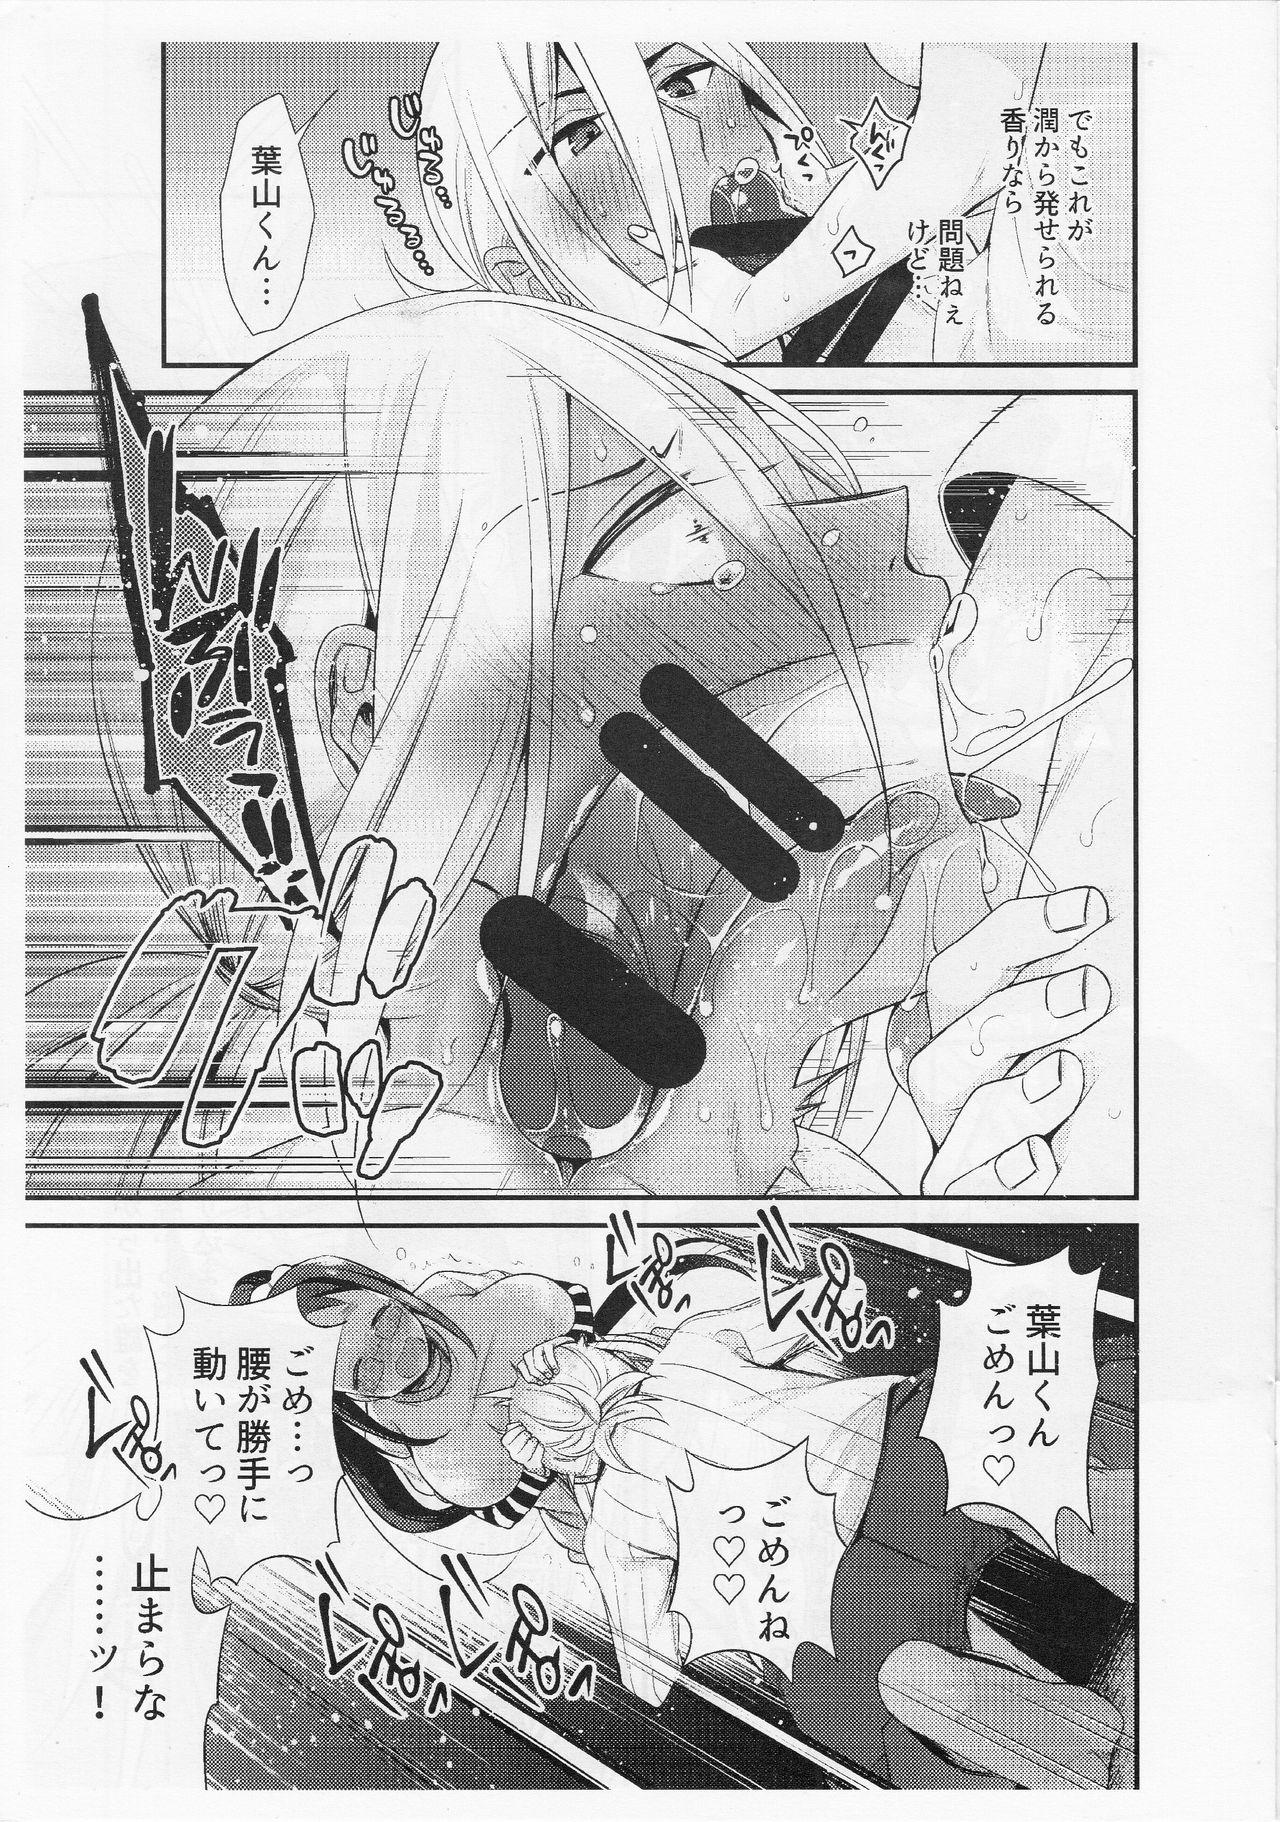 Passionate 【コピー誌】助けて!葉山くん - Shokugeki no soma Alt - Page 5